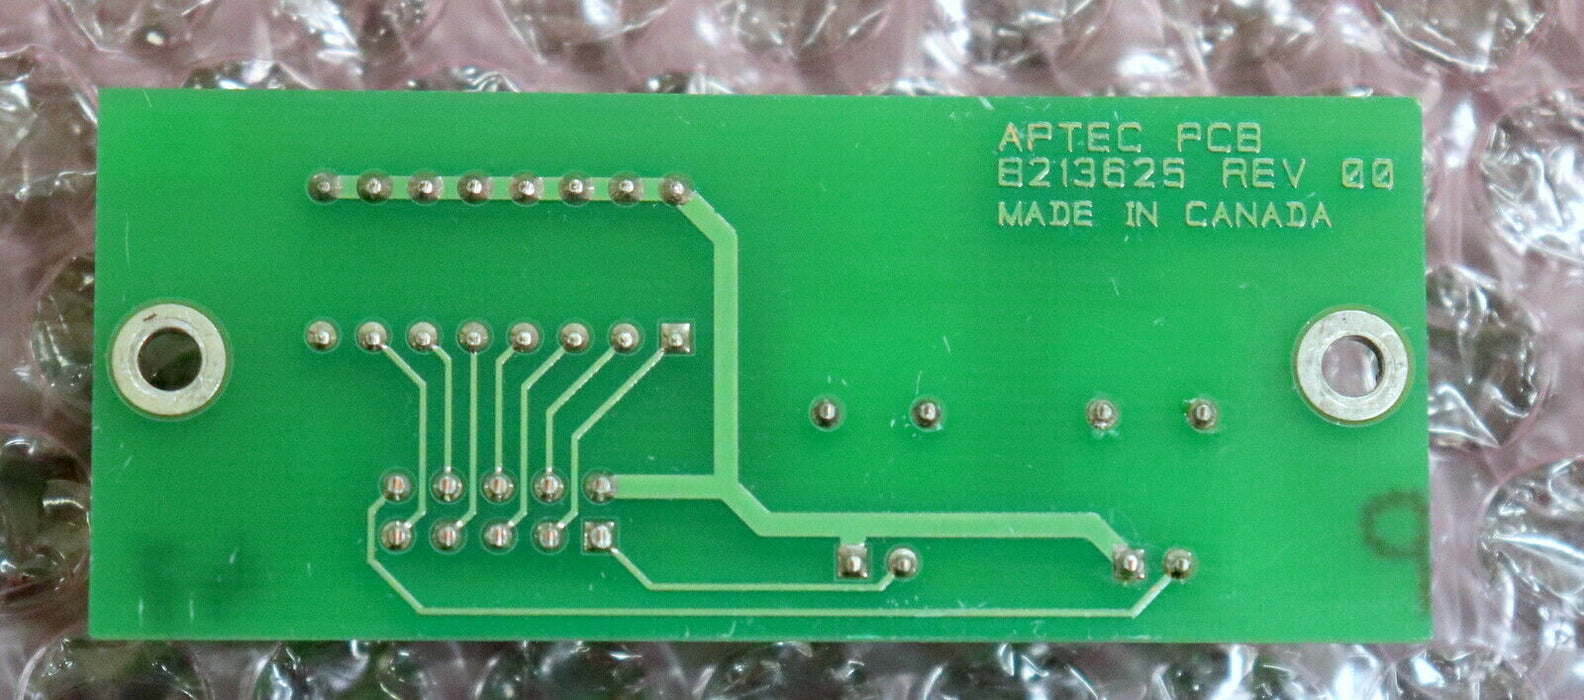 APTEC Assy Board REV 00 PCB B213625 mit 2 x SIEMENS SFH756V  - gebraucht